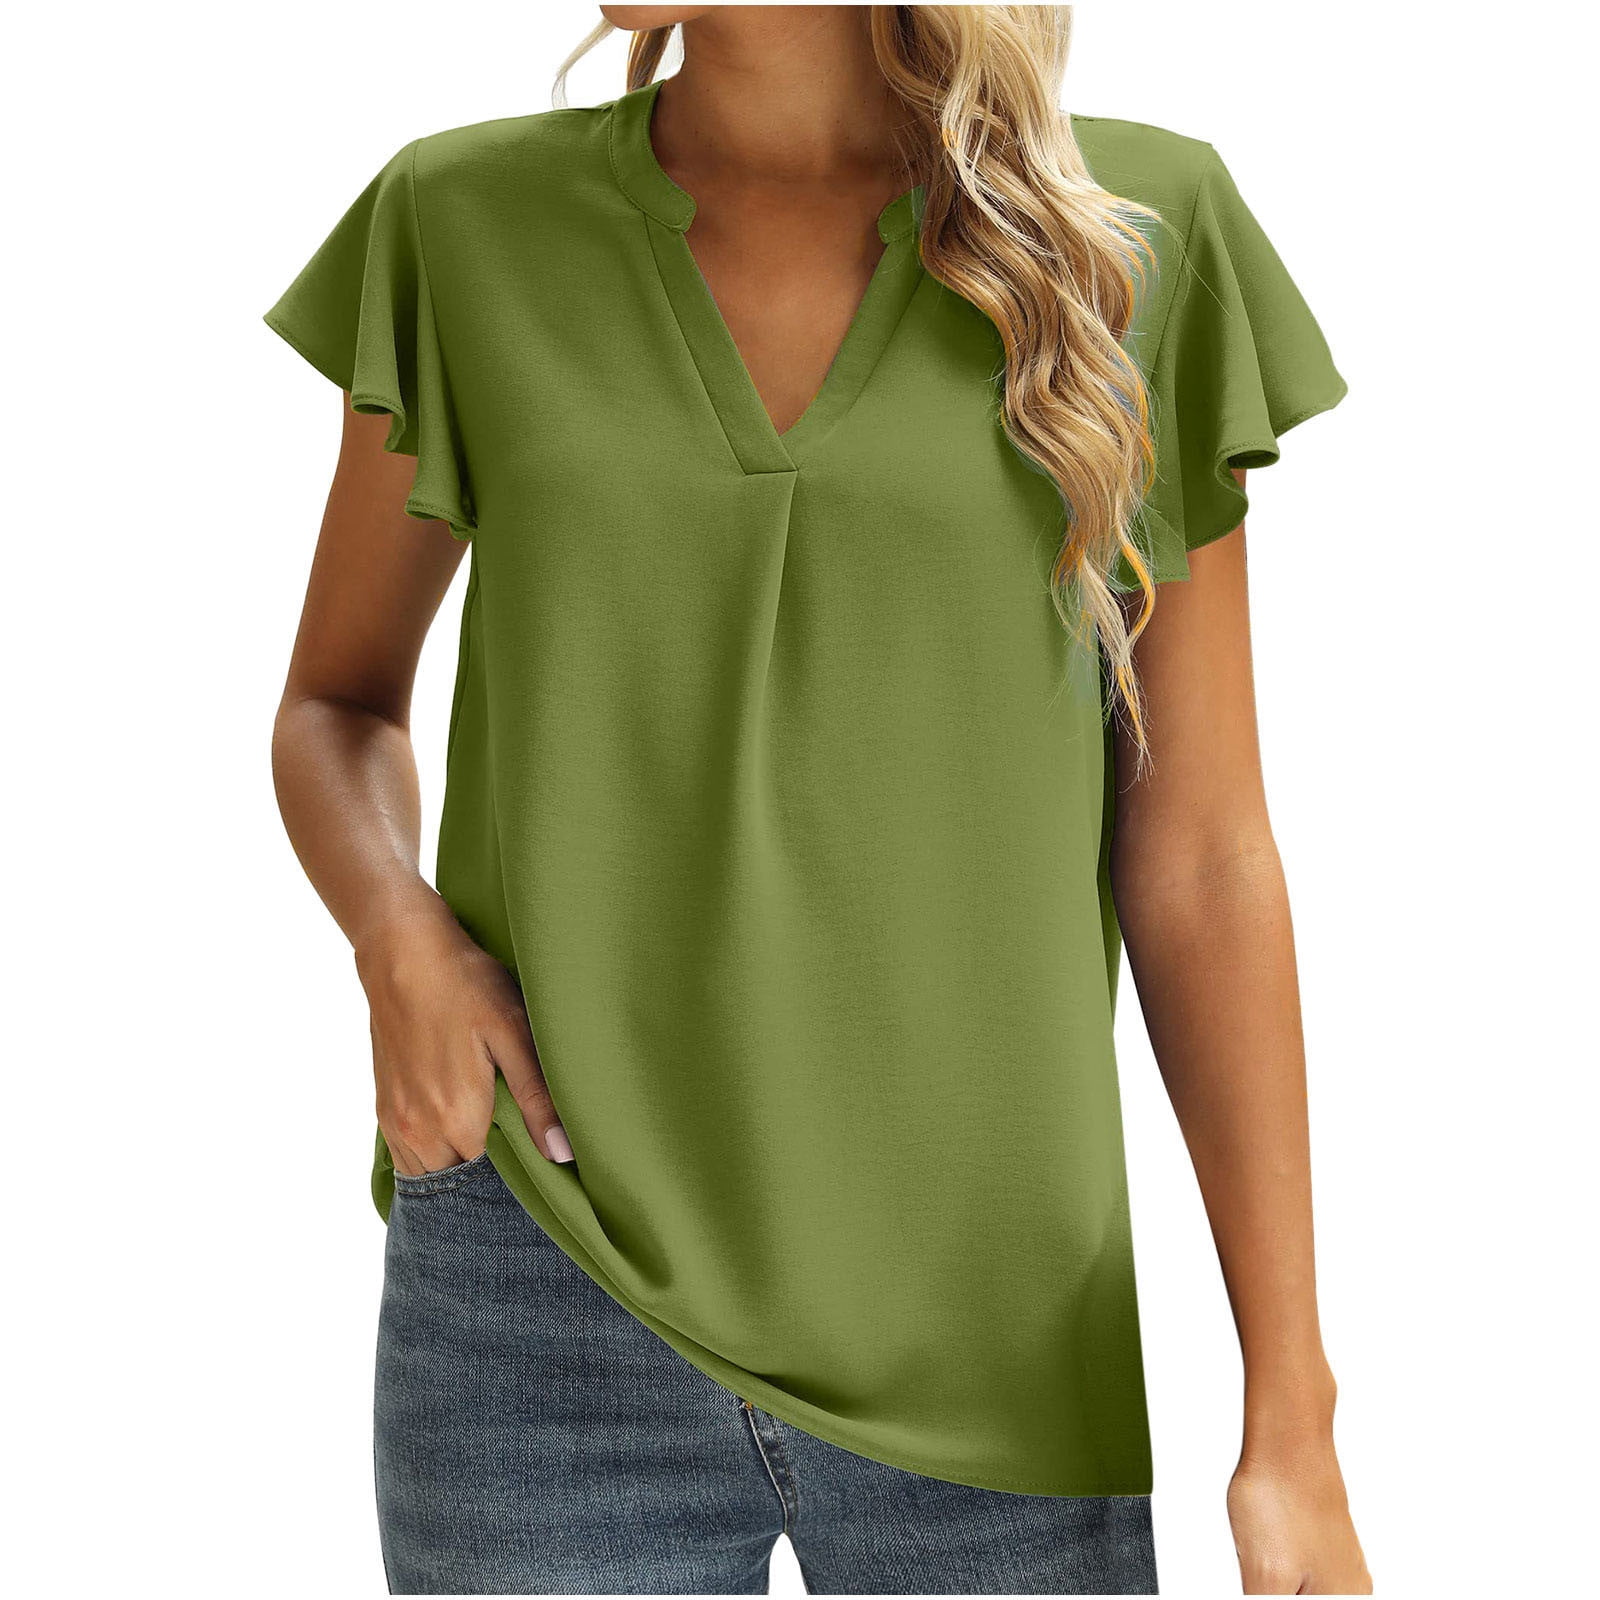 Bass Fishing Women's V Neck Long Sleeve Shirts Pullover Blouses Loose  T-Shirt Tee Tops